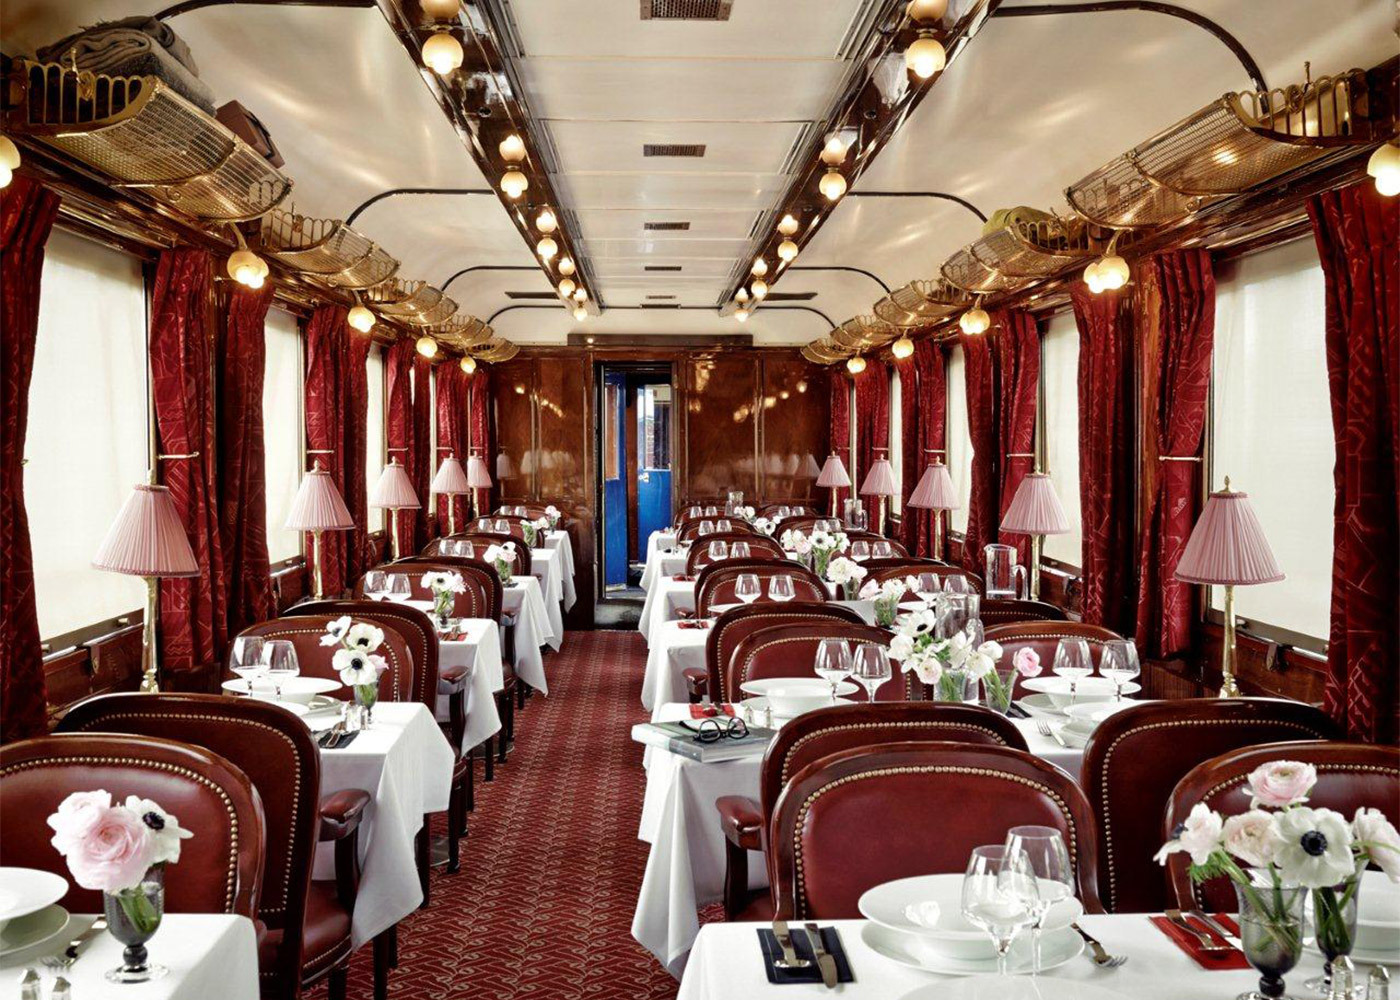 Вагон “Orient Express”